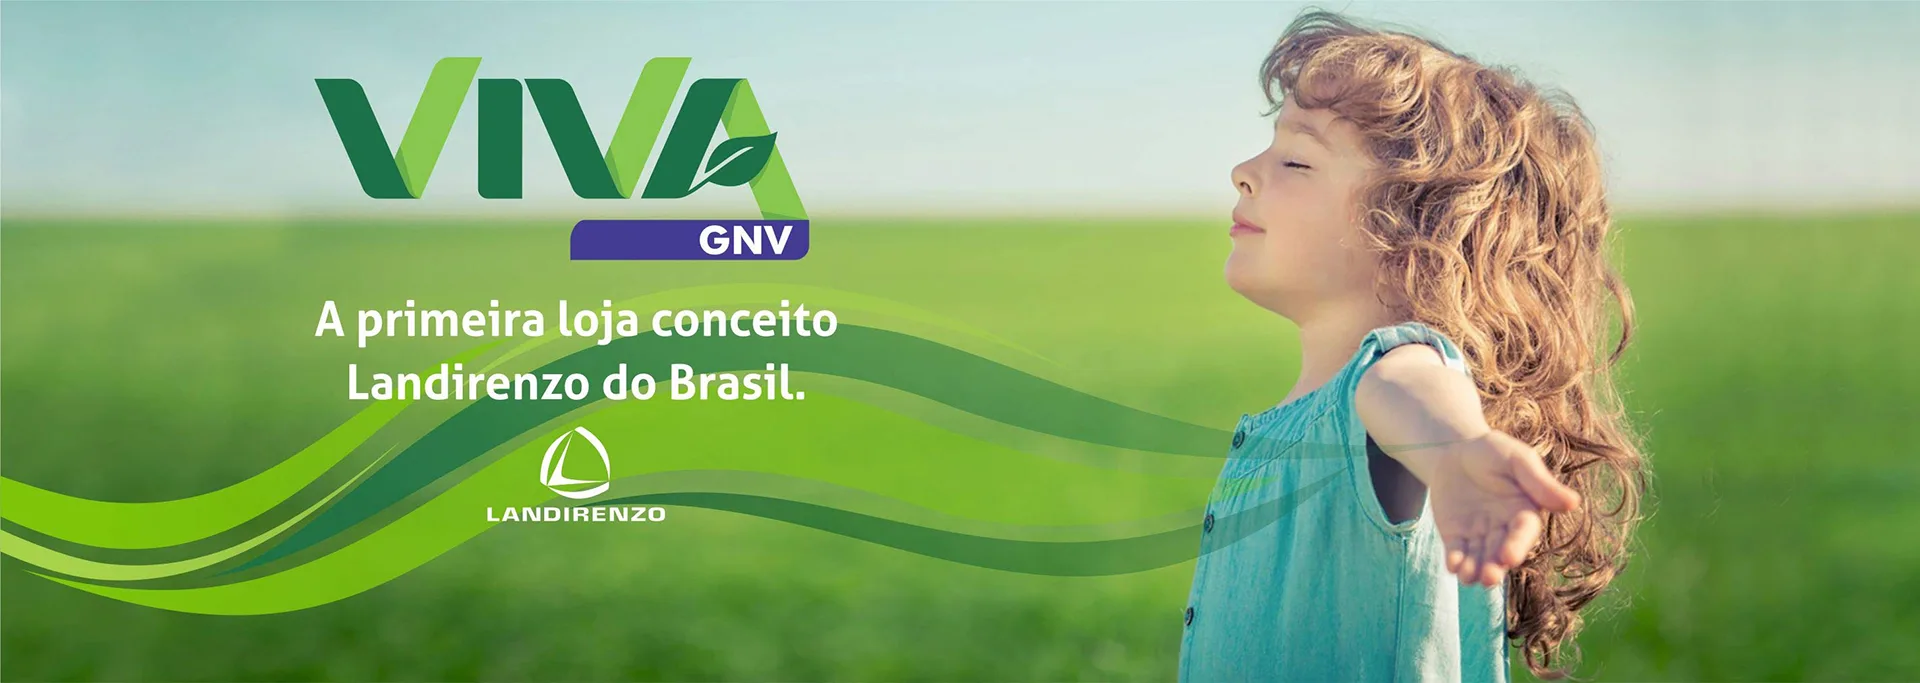 Viva GNV